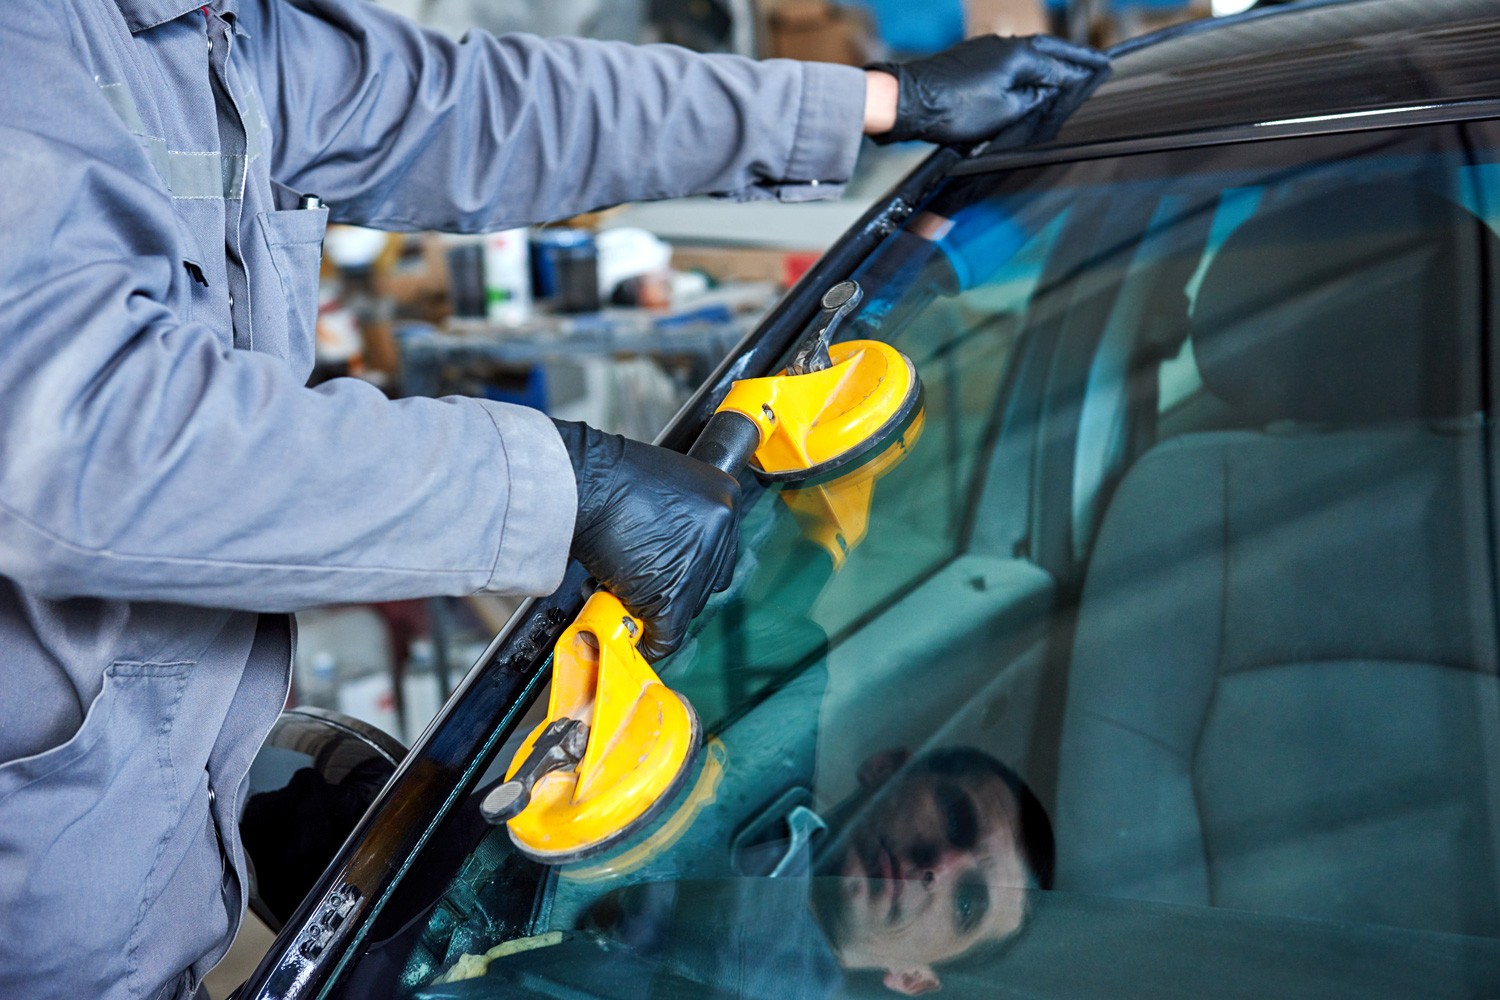 Glazier repairman mechanic worker replaces windshield or windscreen on a car in automobile workshop garage